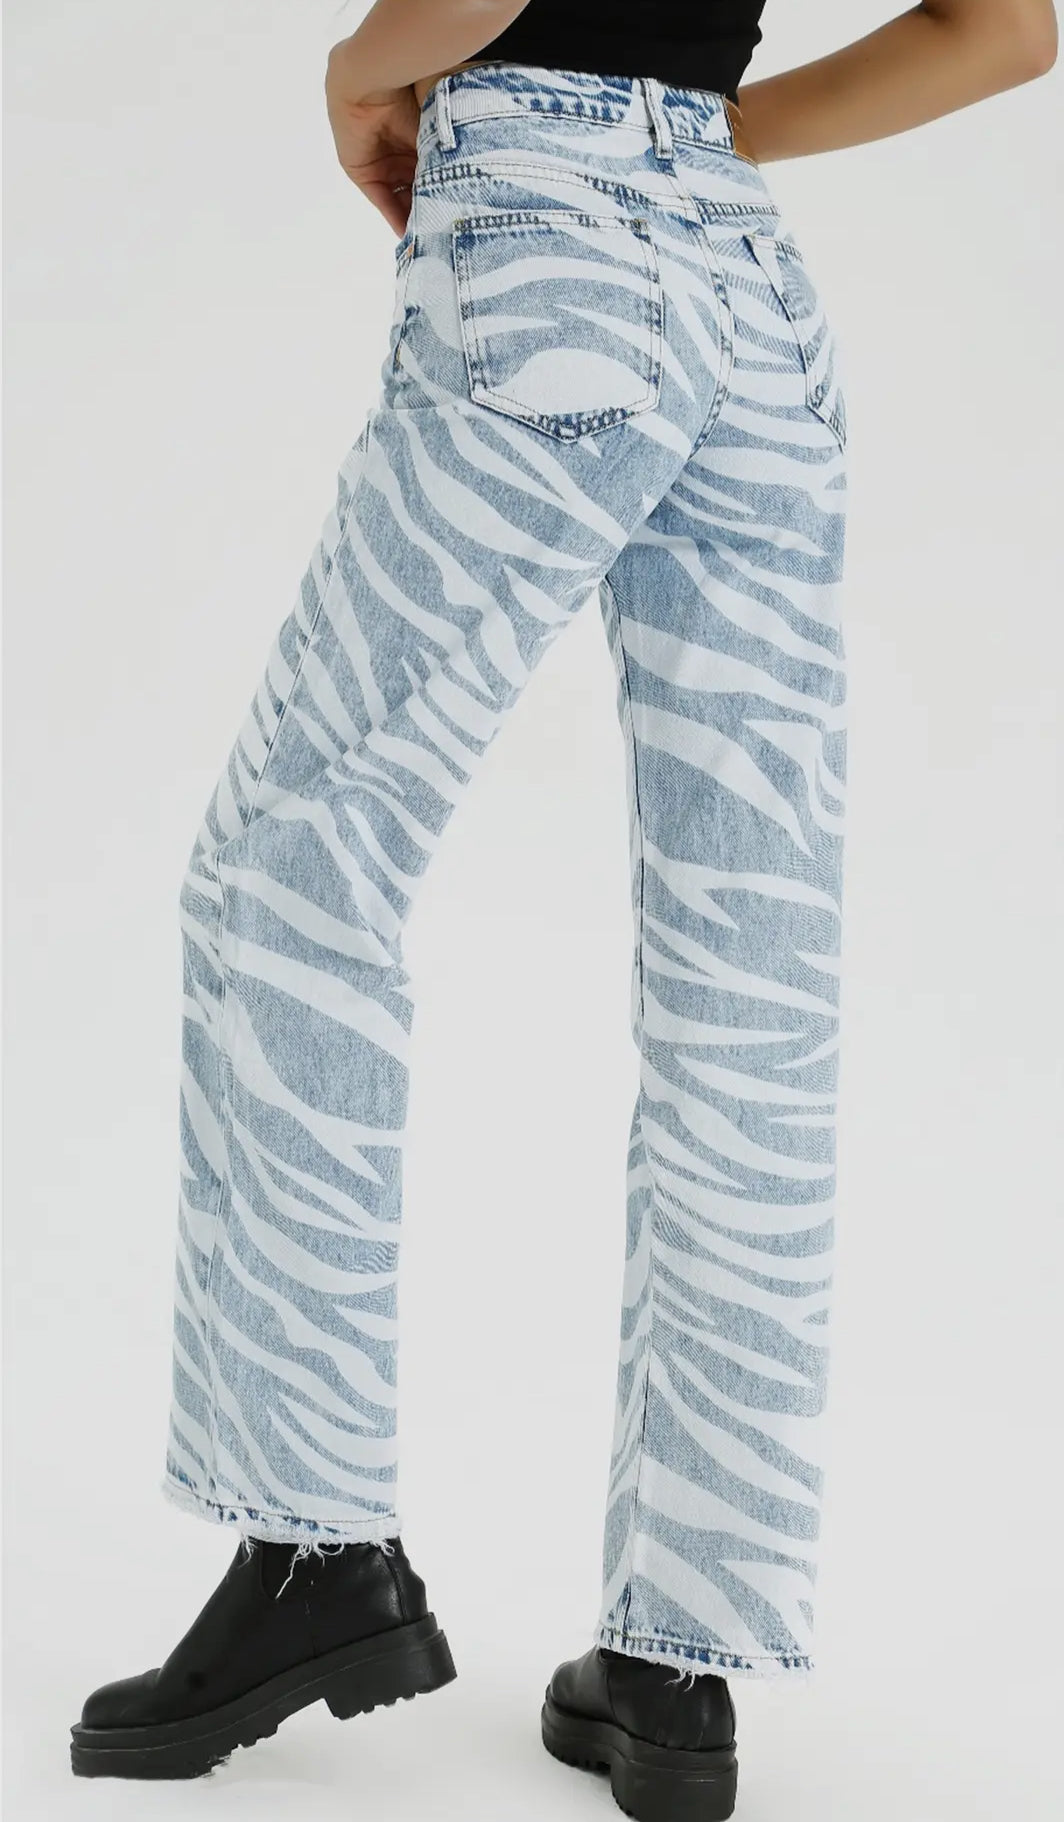 Zebra mom jeans mid rise